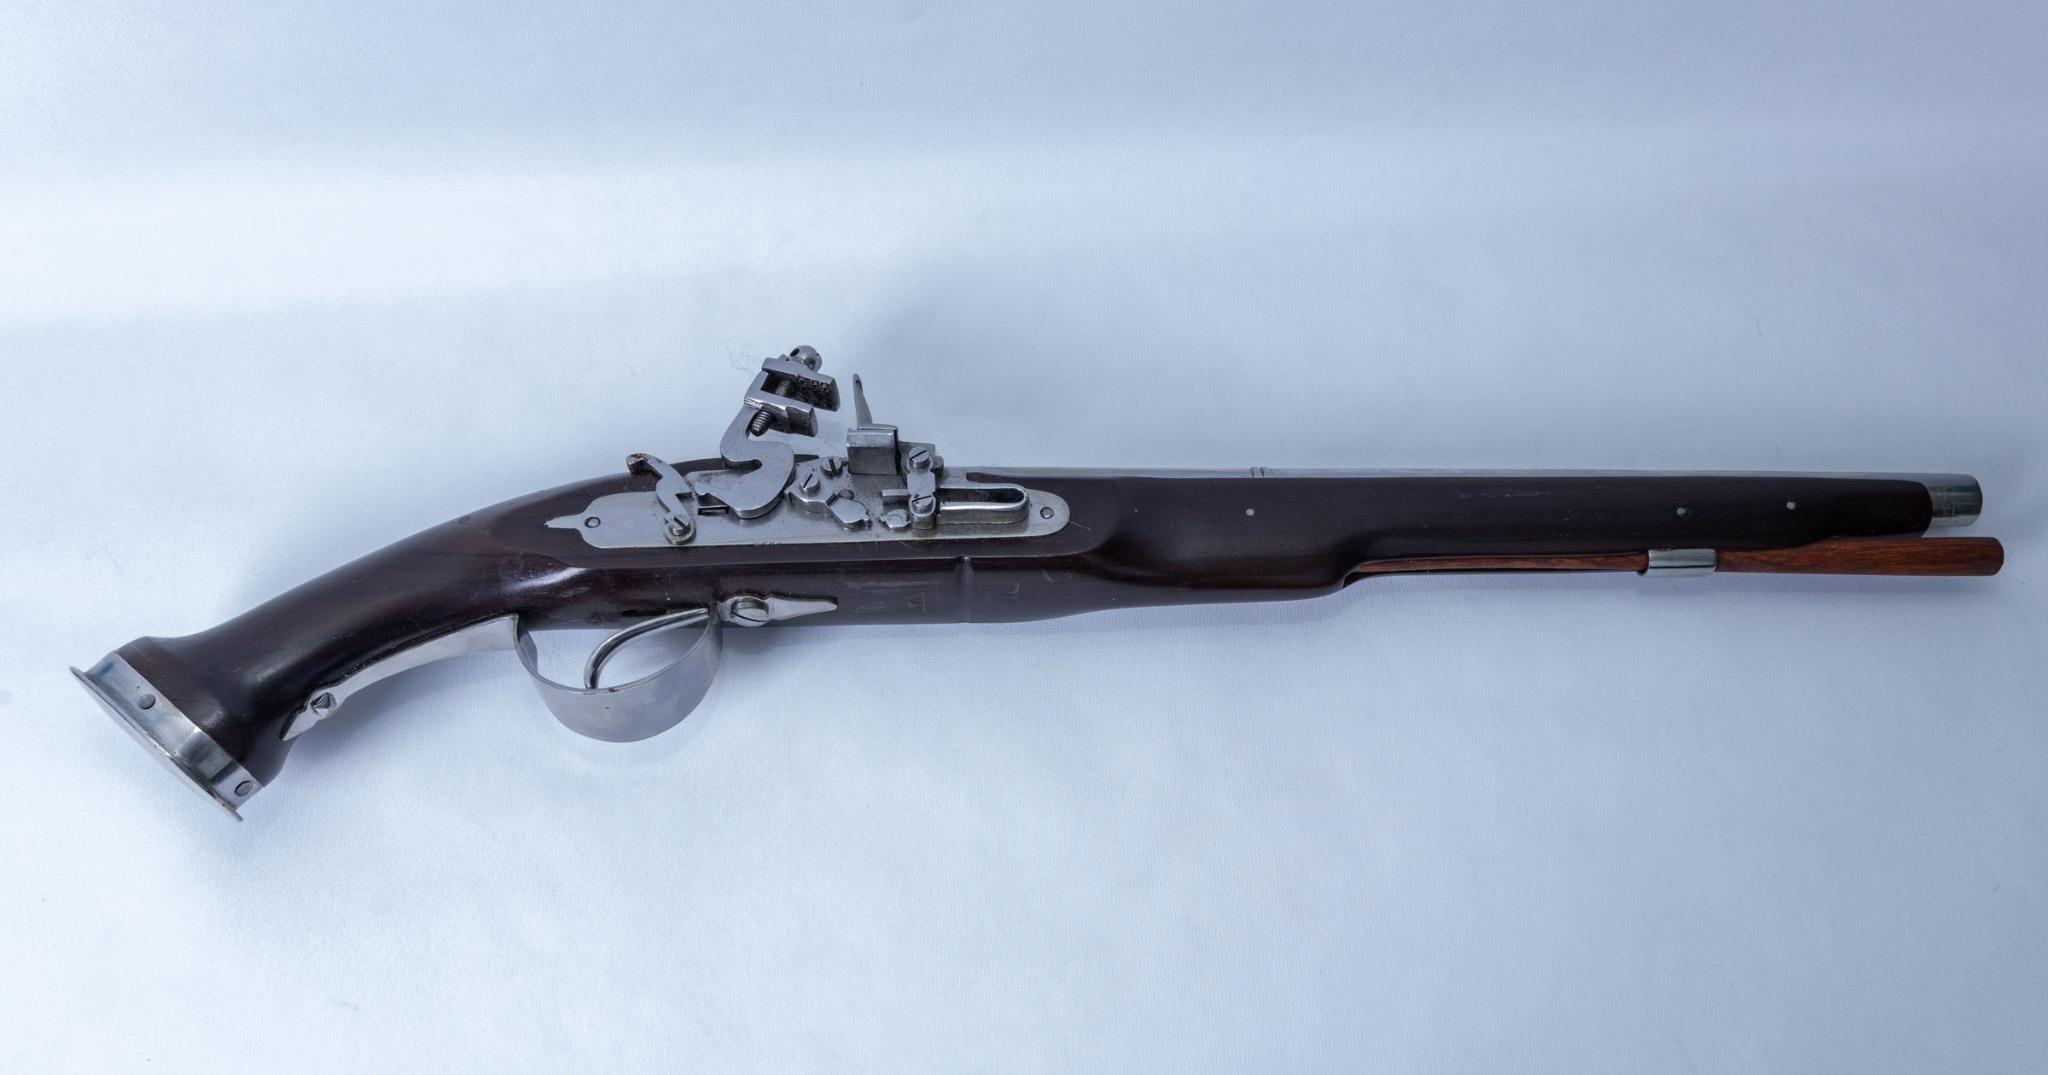 Decorative flintlock pistol, non-firing